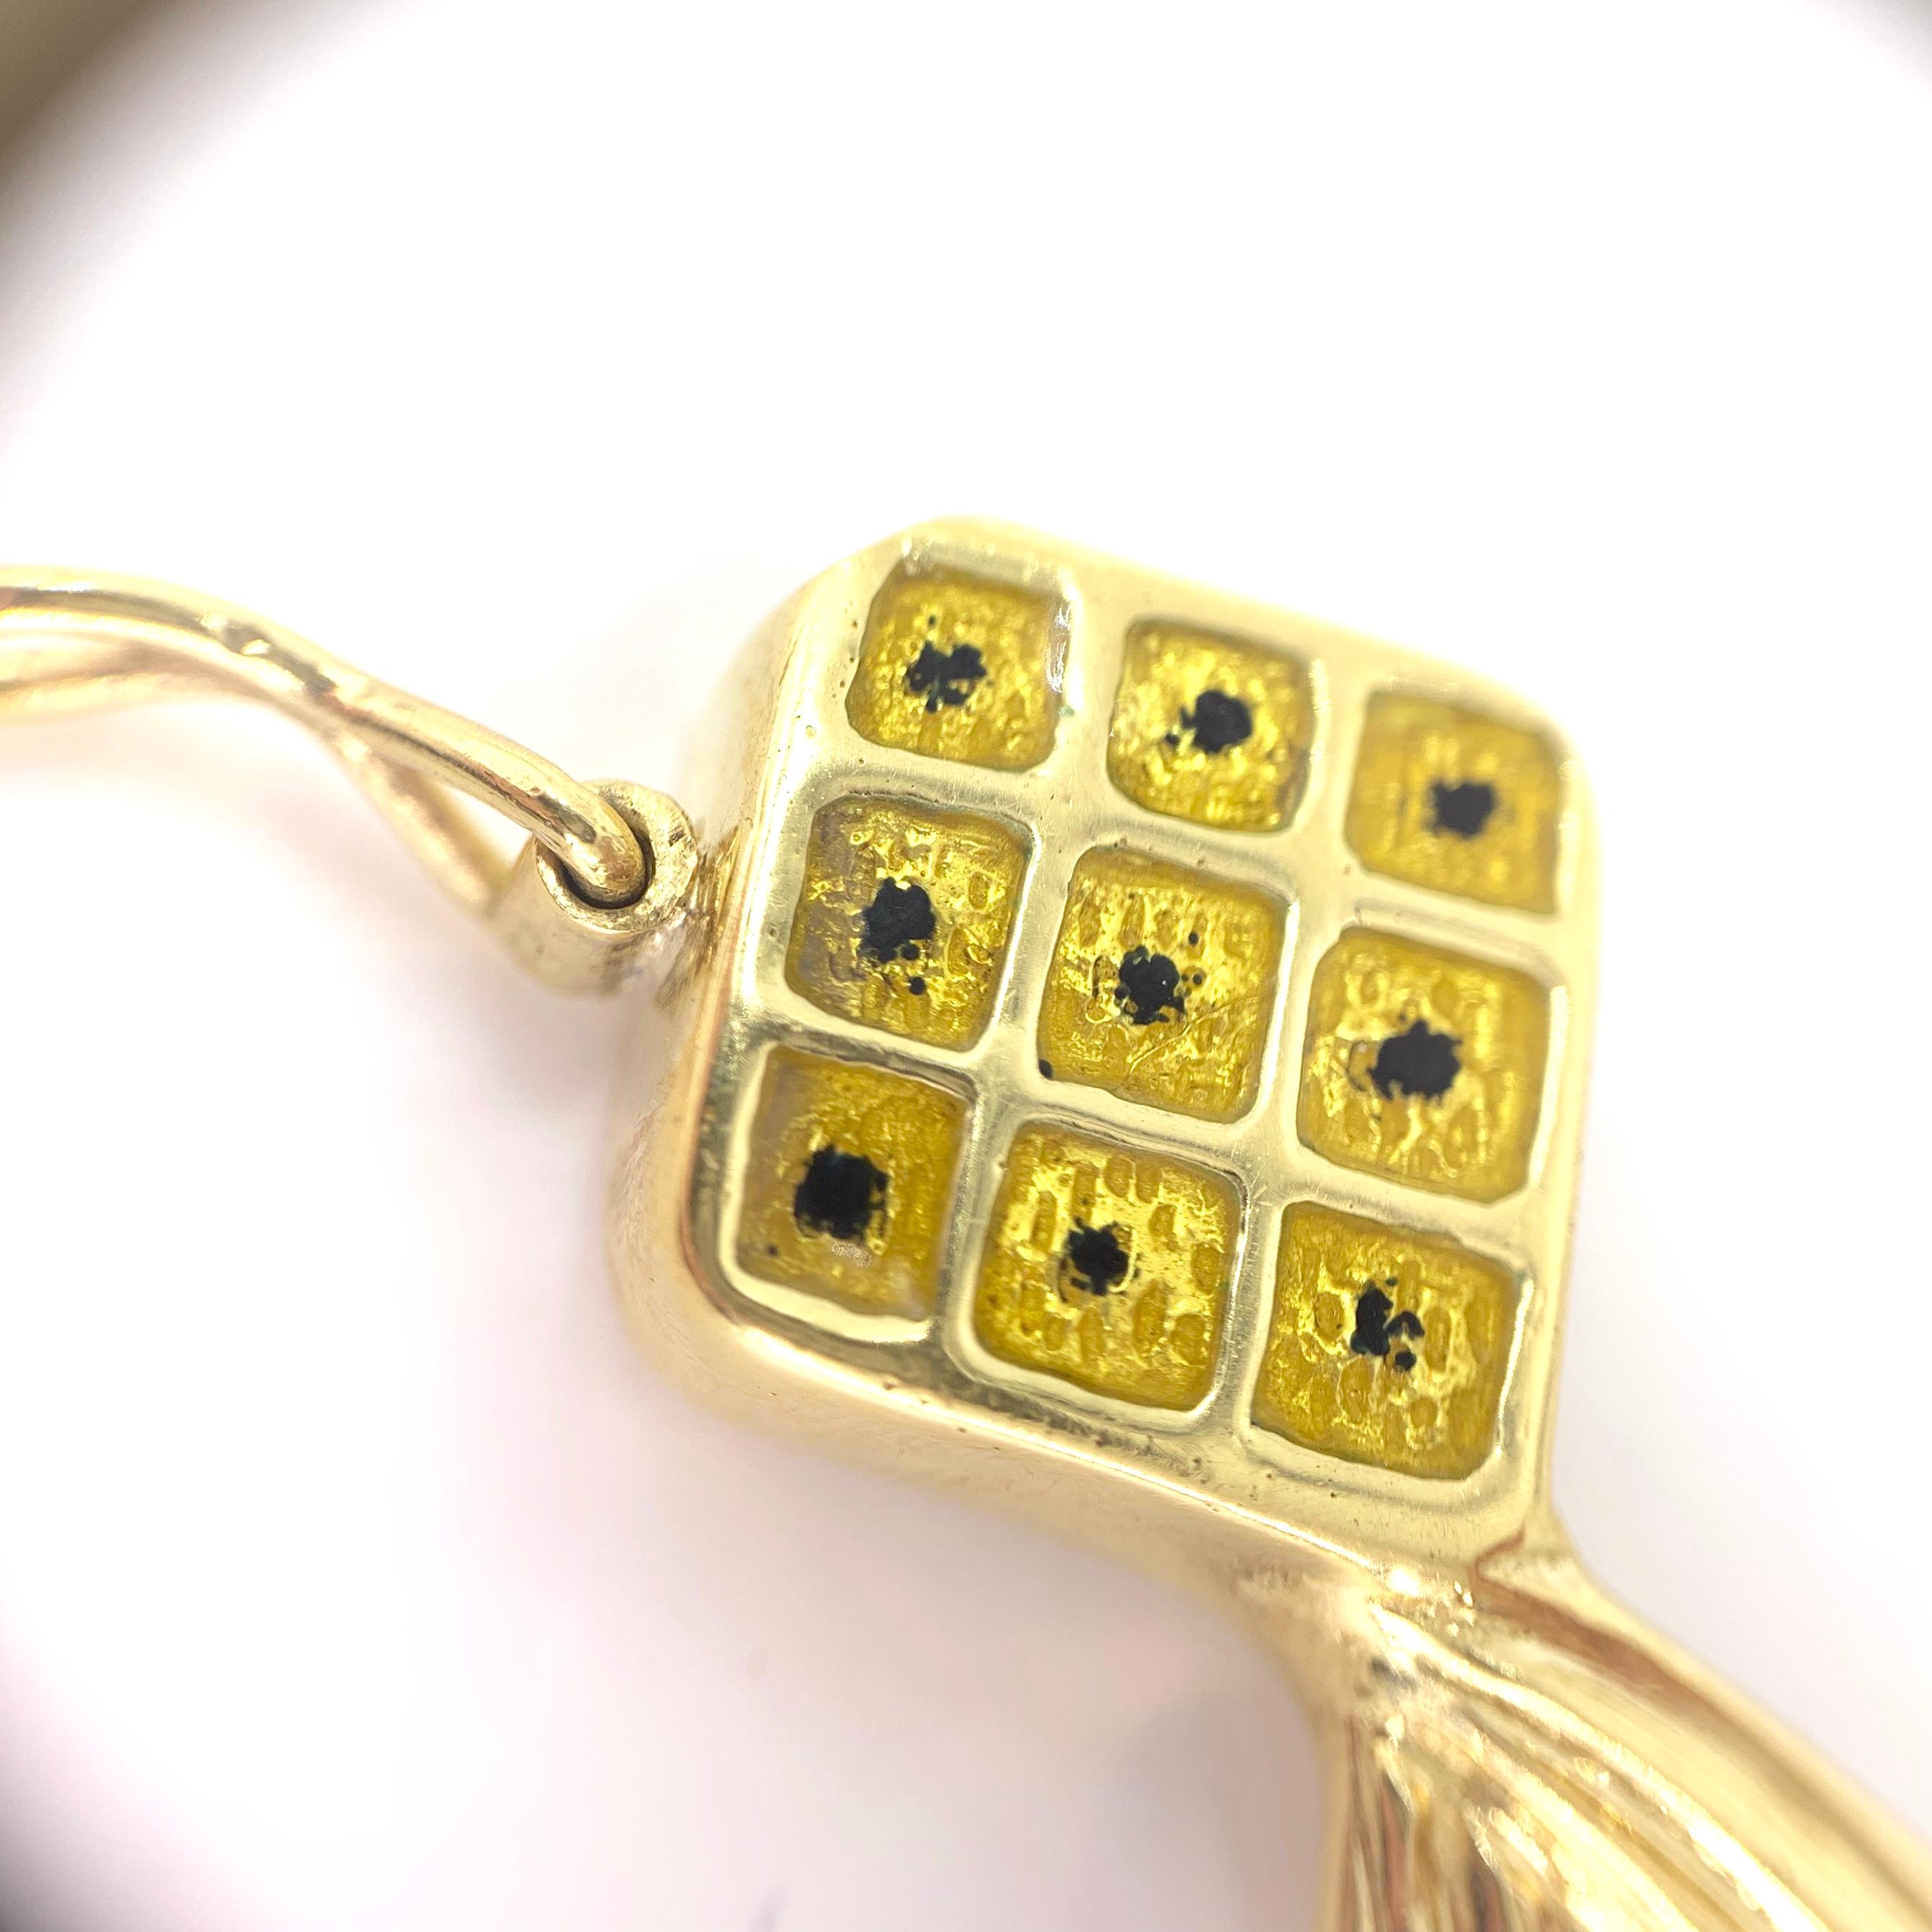 Hidalgo 18 Karat Gold and Enamel Candy Themed Bracelet 9